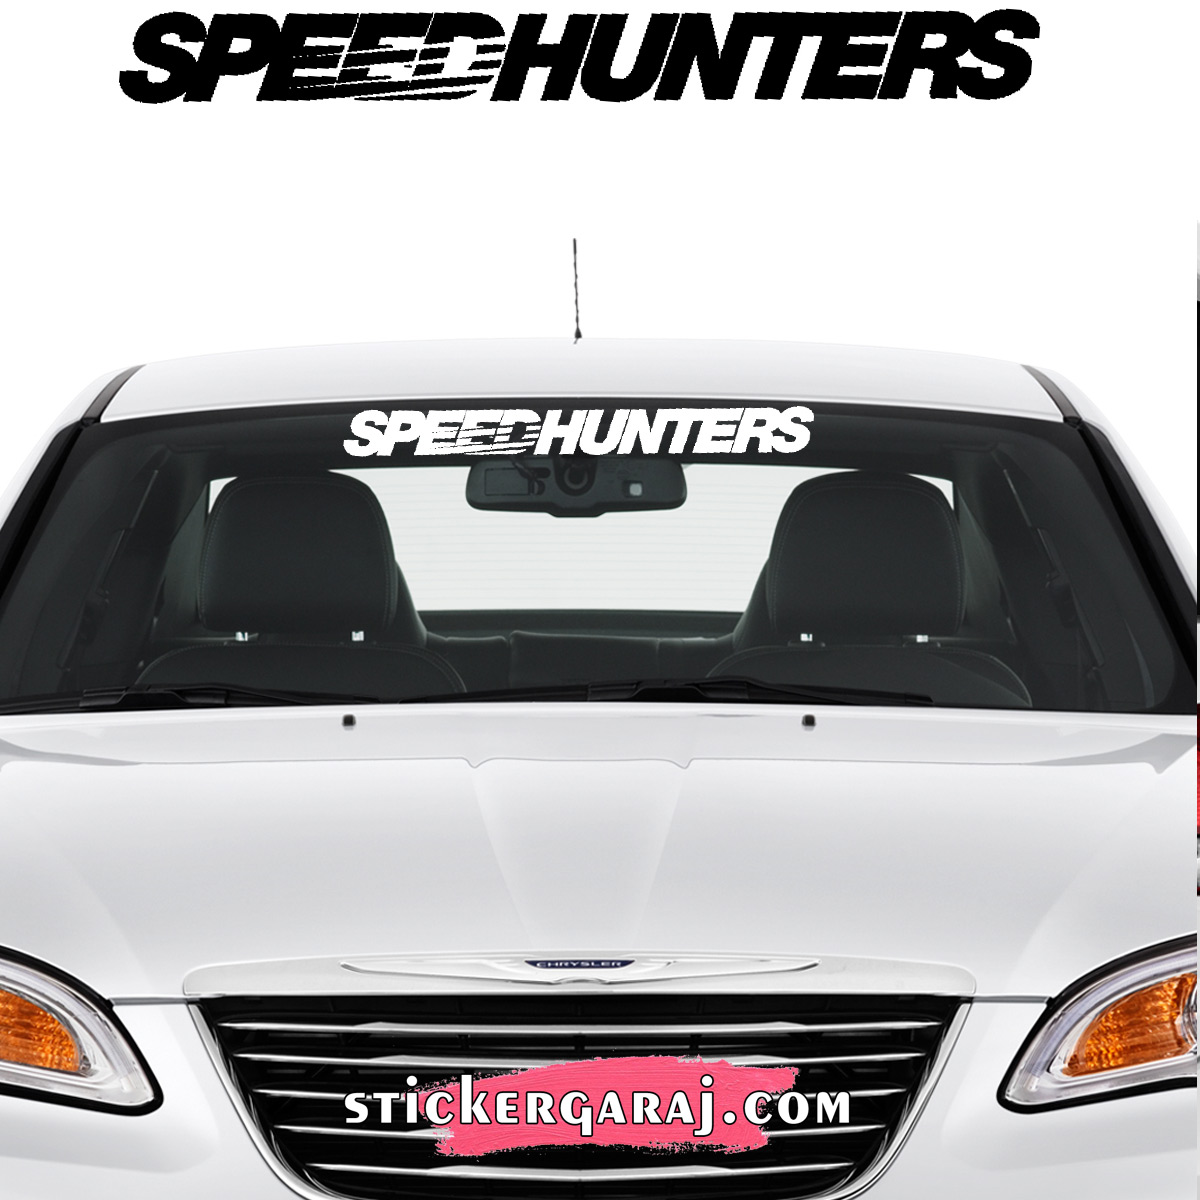 Hyundai oto sticker - Hyundai cam sticker - speedhunters